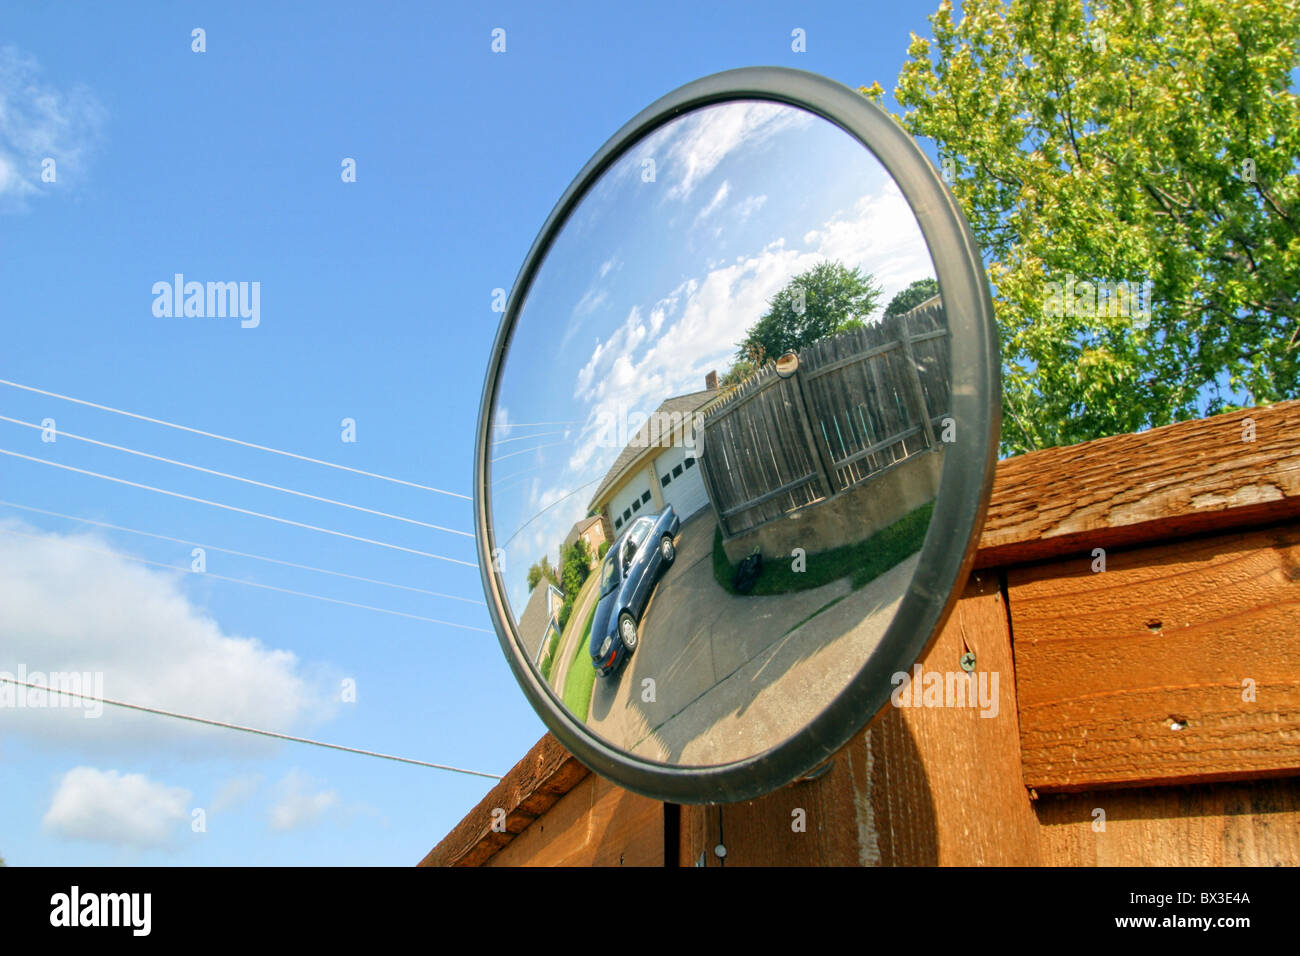 USA America United States North America Texas Richardson convex mirror back alley safety traffic Stock Photo